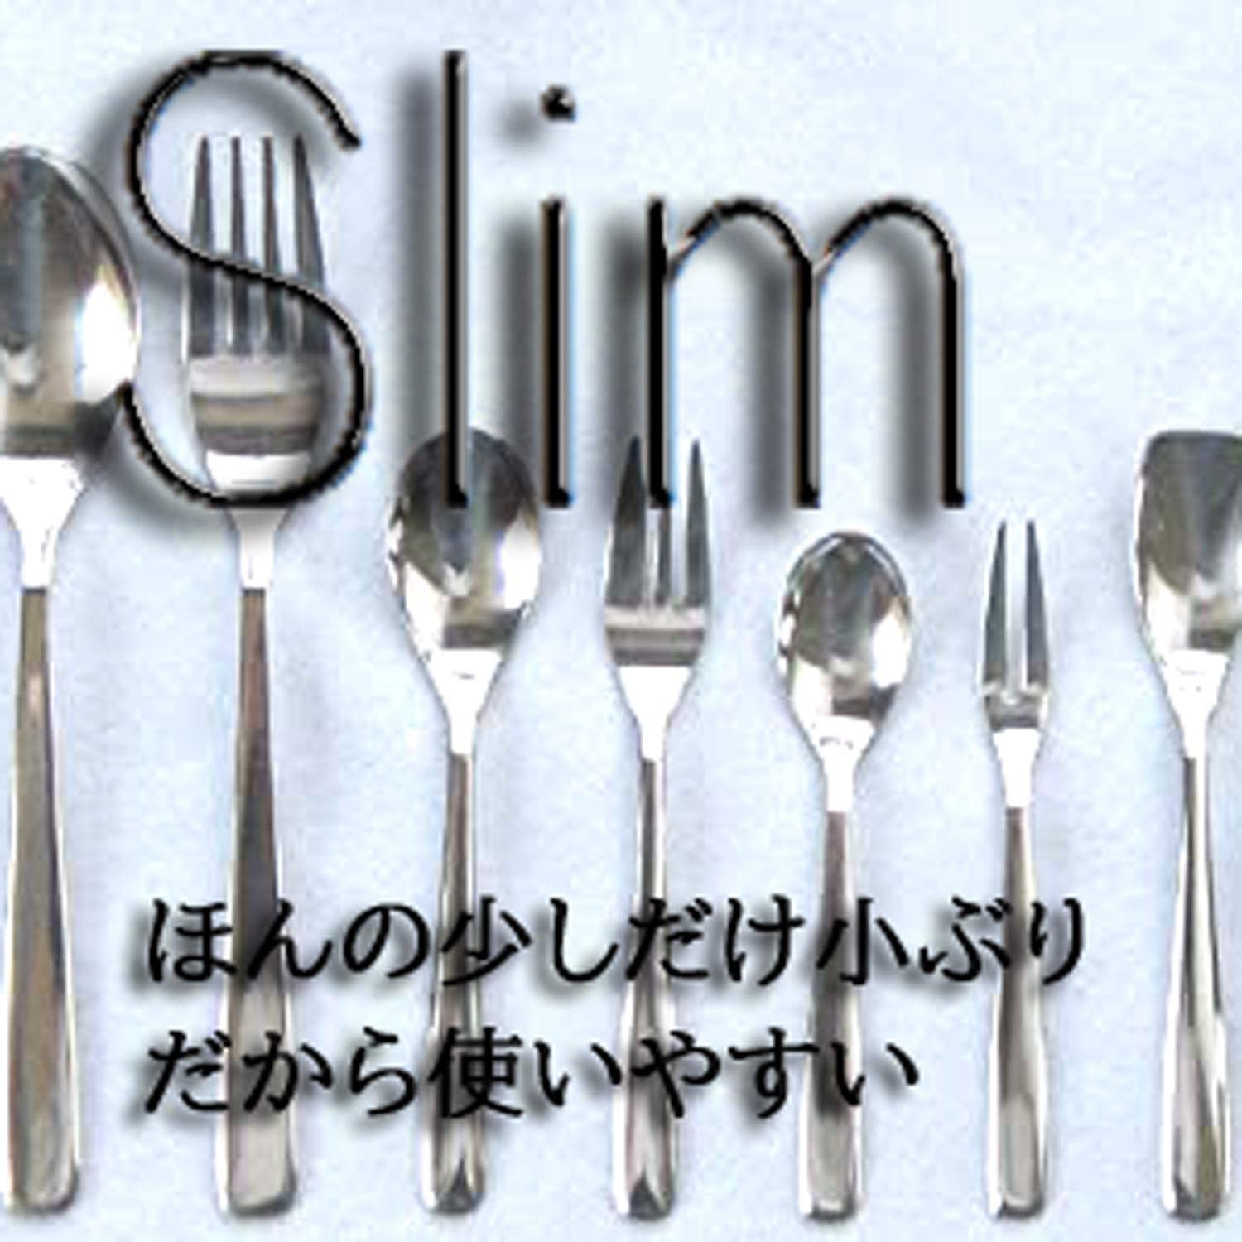 Nagao(ナガオ) Slim ディナーフォークの商品画像6 